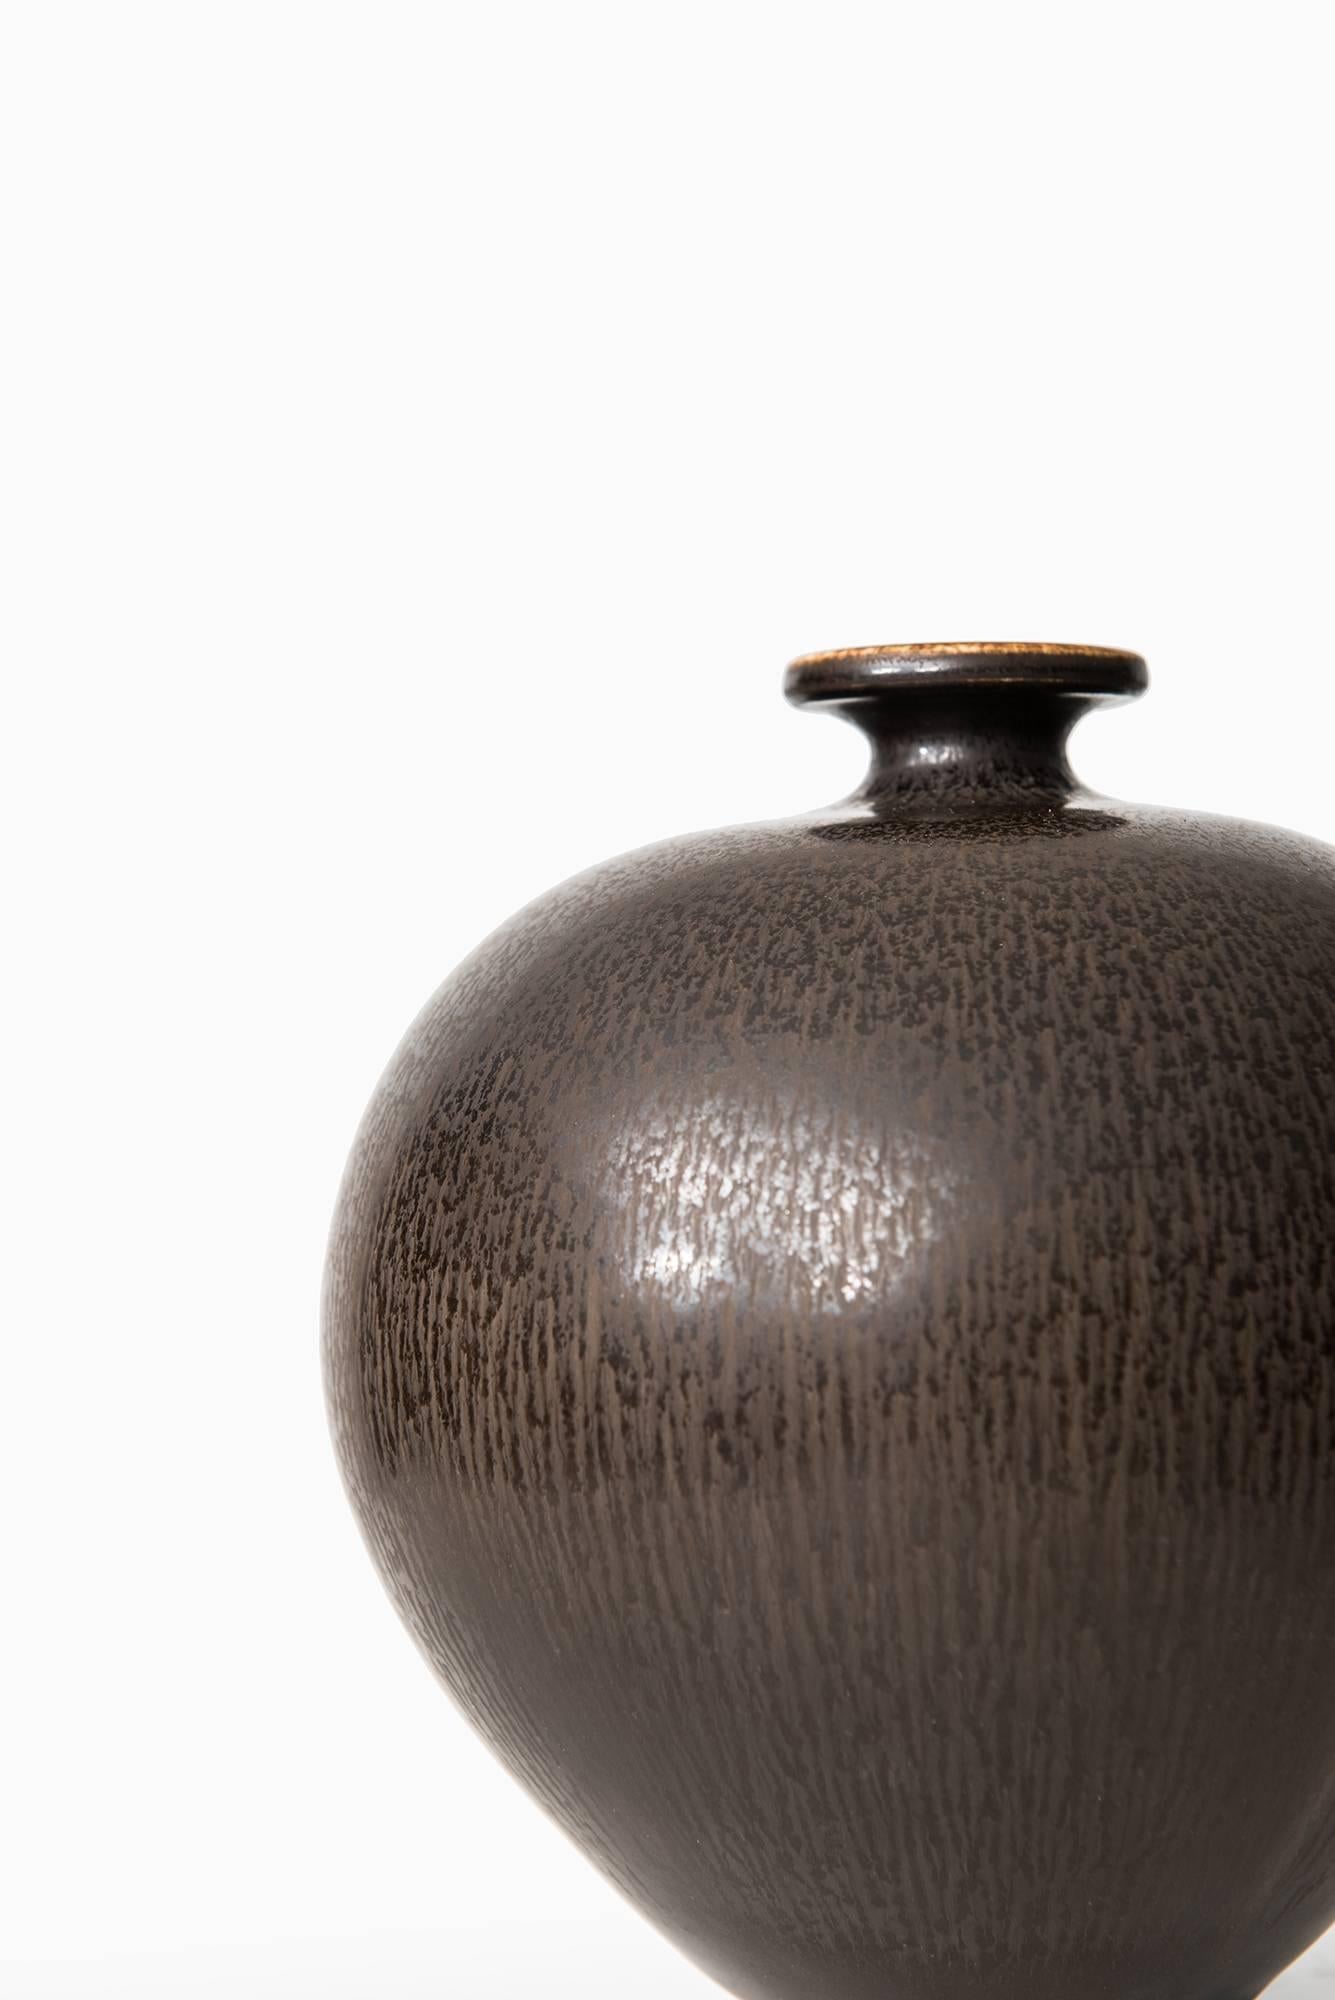 Scandinavian Modern Berndt Friberg Ceramic Vase by Gustavsberg in Sweden